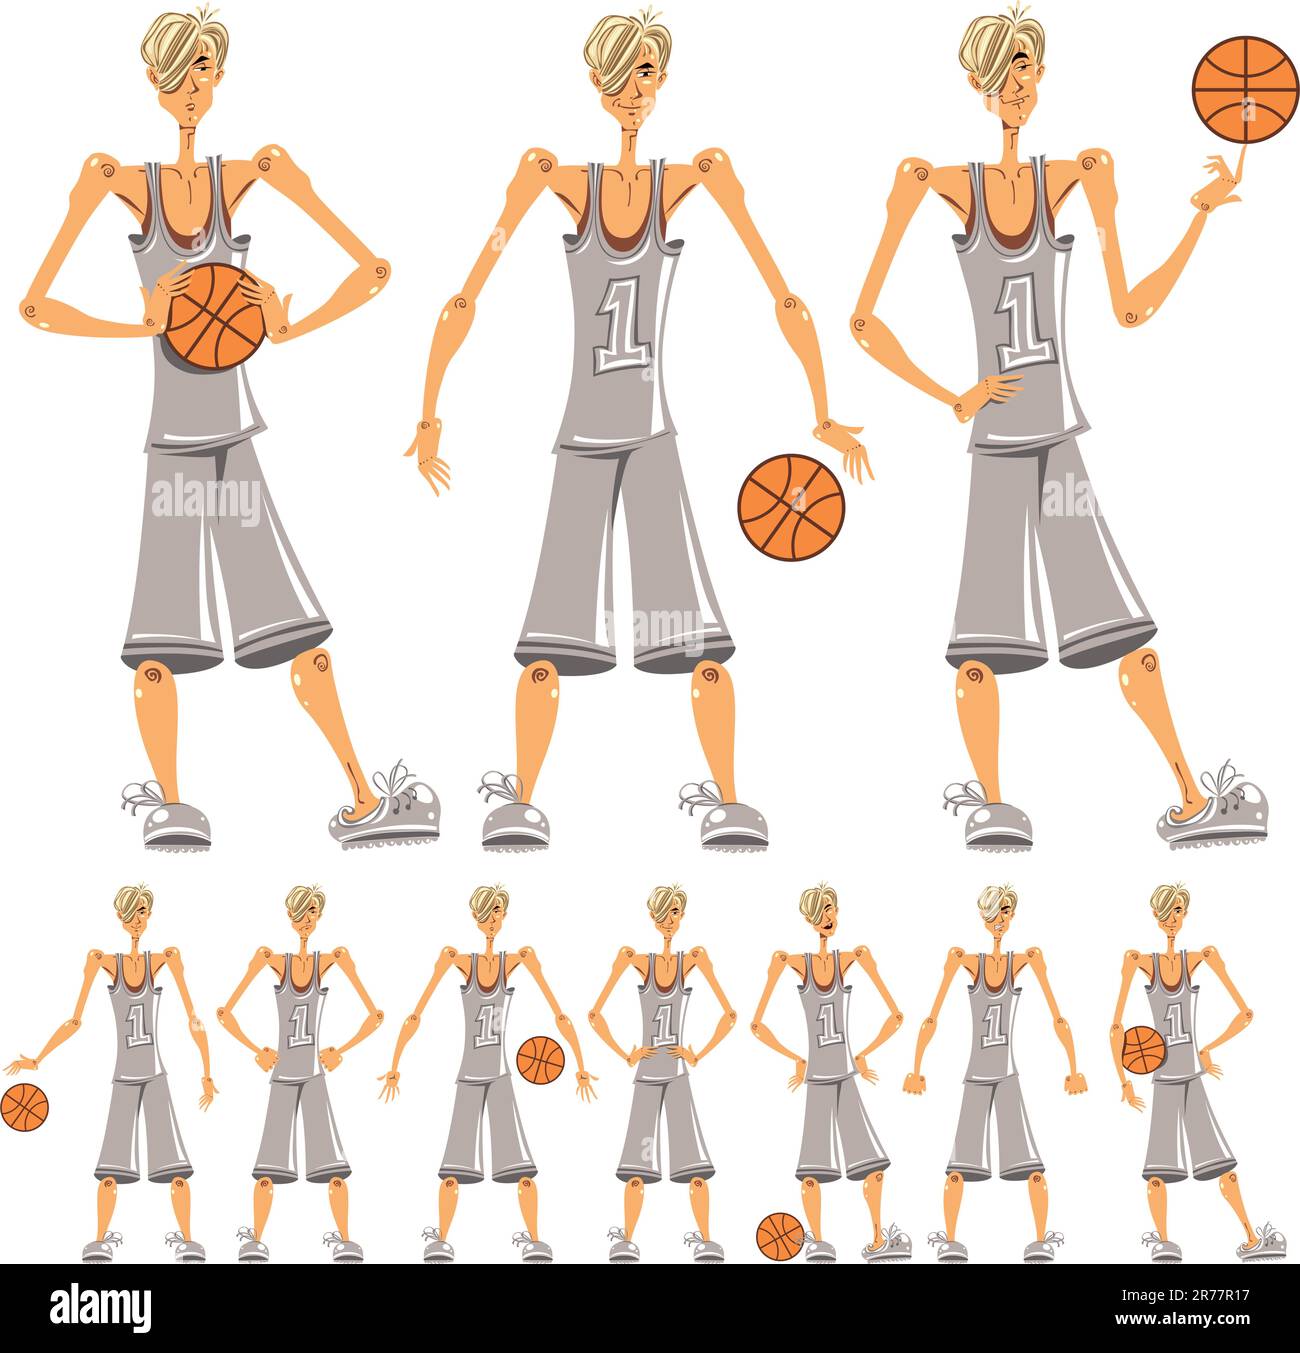 Illustrationen für Basketballspieler. Stock Vektor